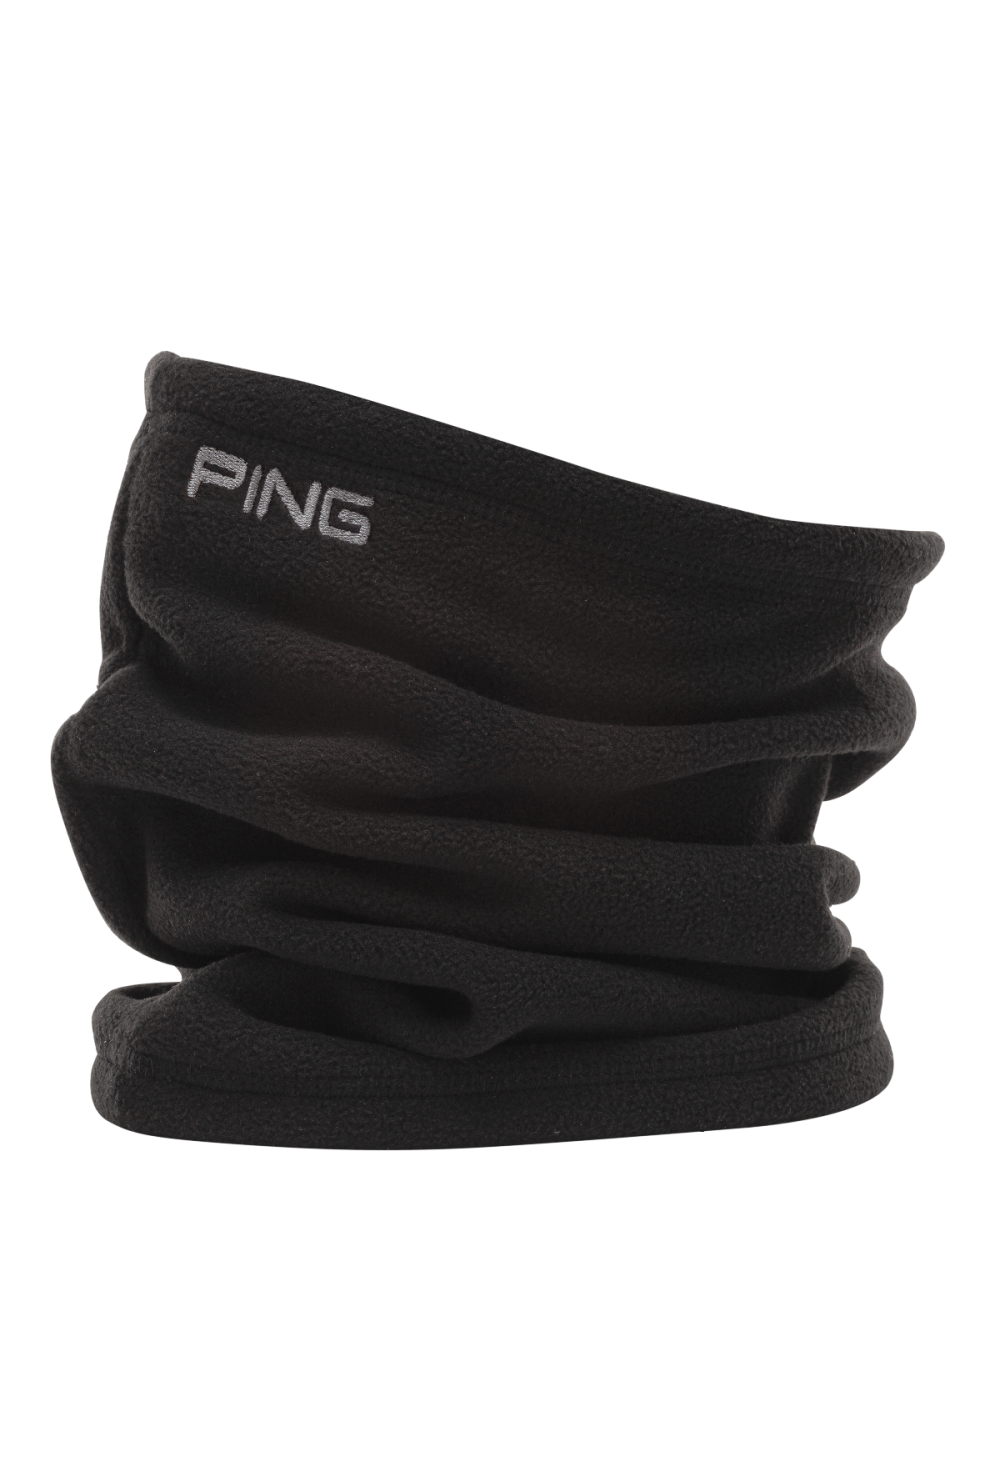 Ping Sensorwarm Neck Warmer Black